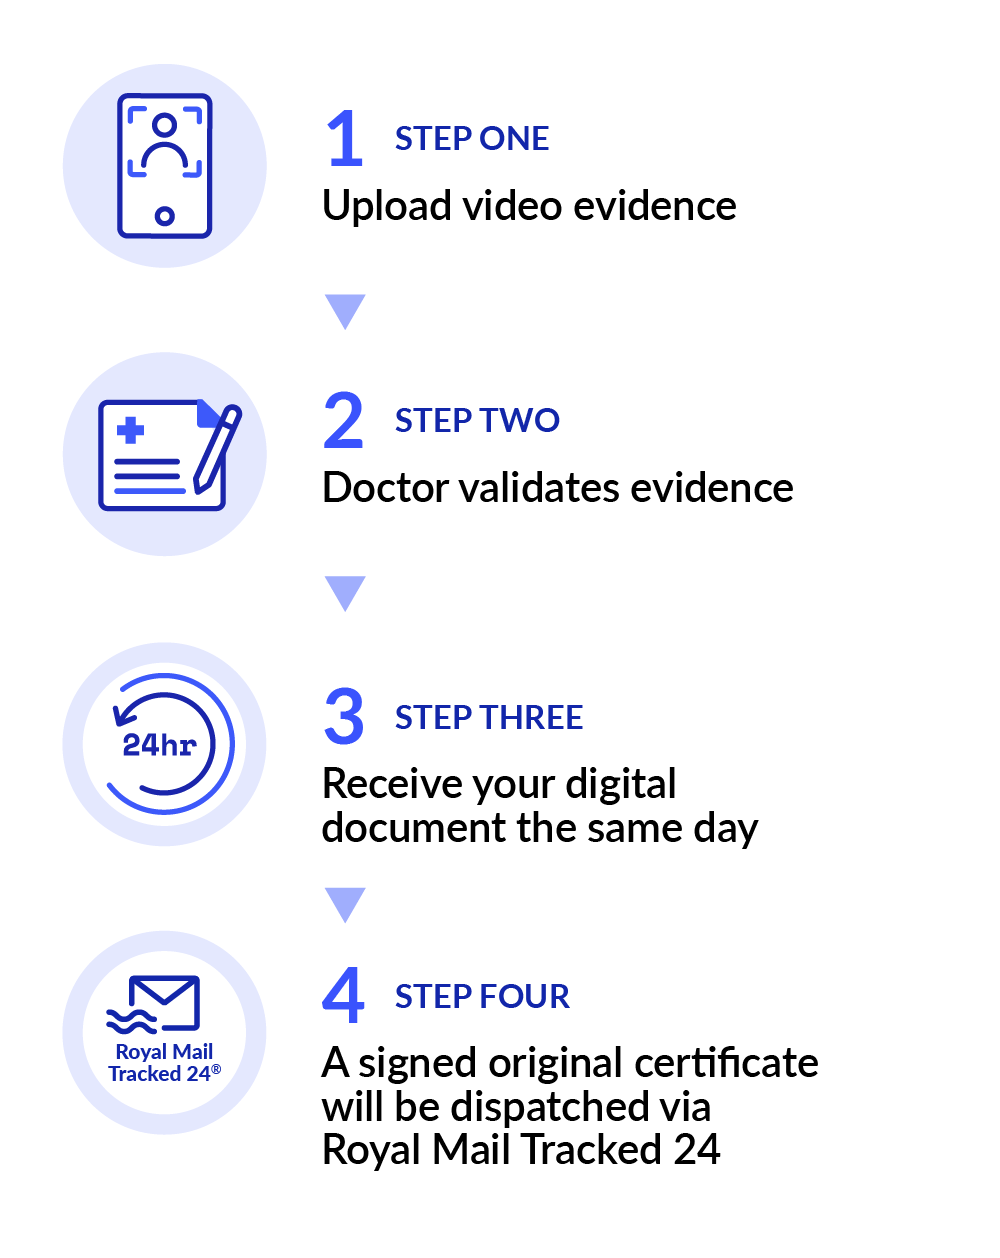 Step 1 - Upload video evidence, Step 2 - Doctor validates, Step 3 - Receive digital document same day, Step 4 - Receive hard copy document